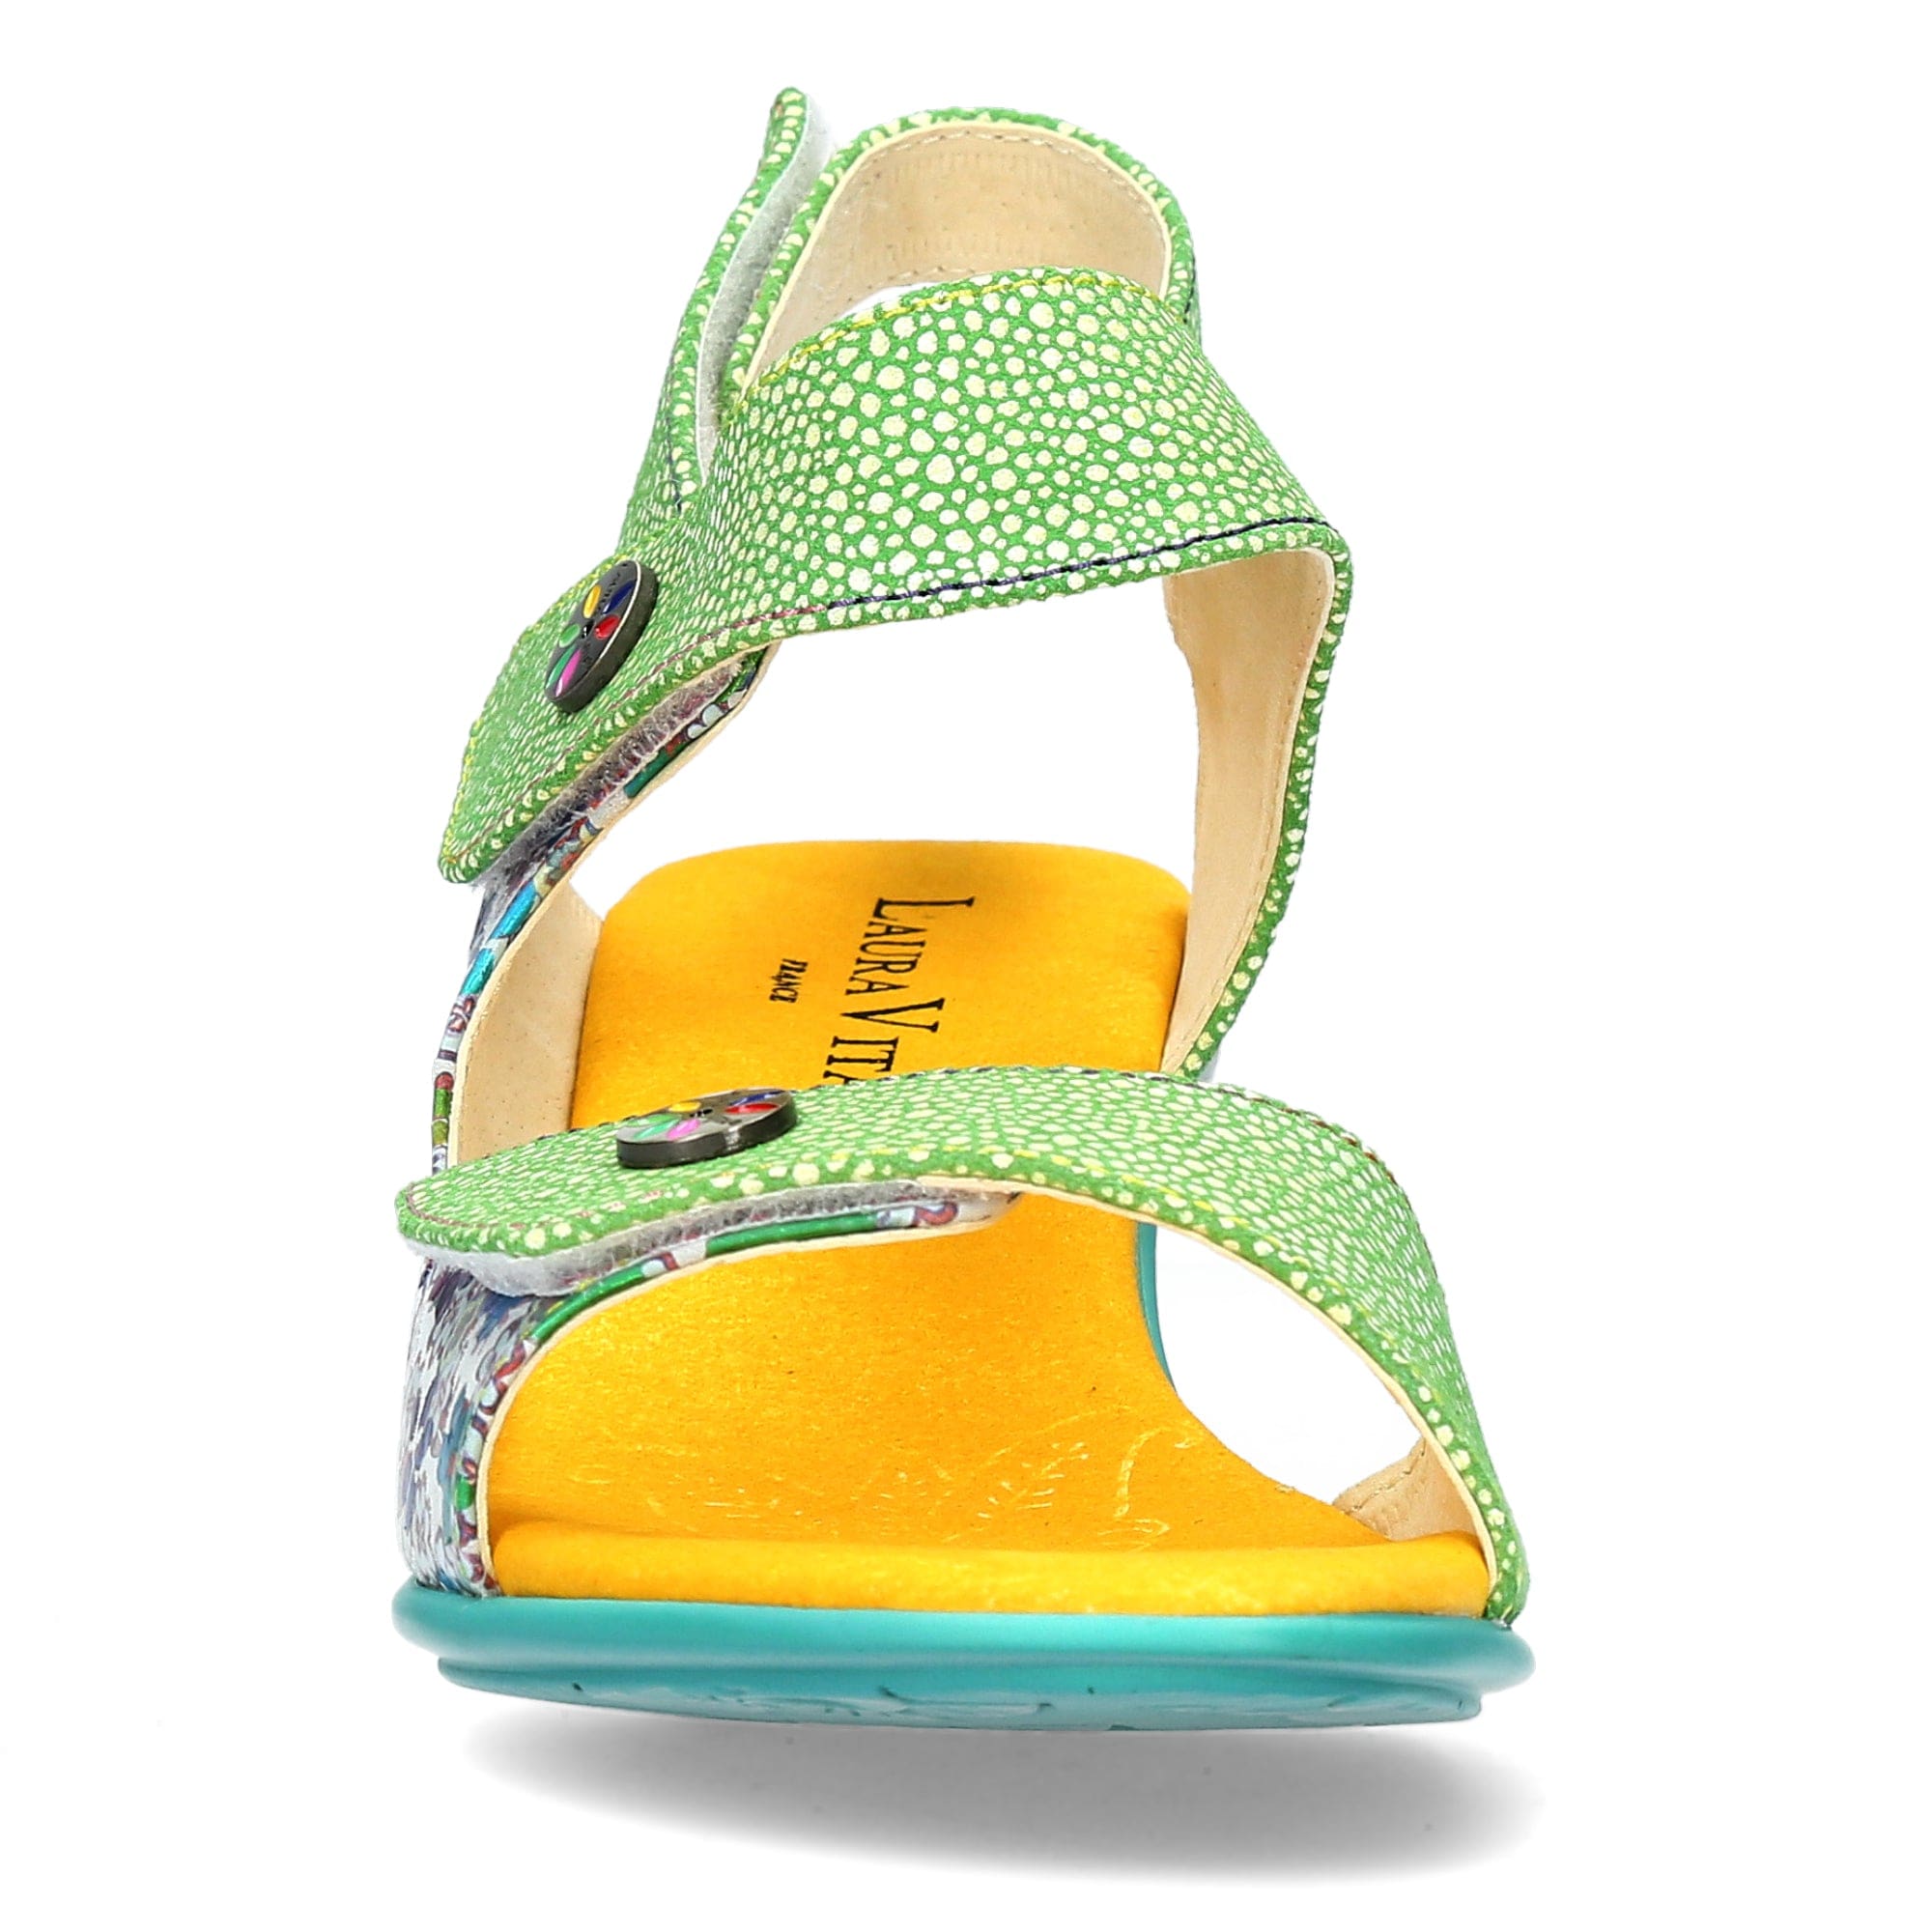 Chaussure BECTTINOO 223 - Sandale